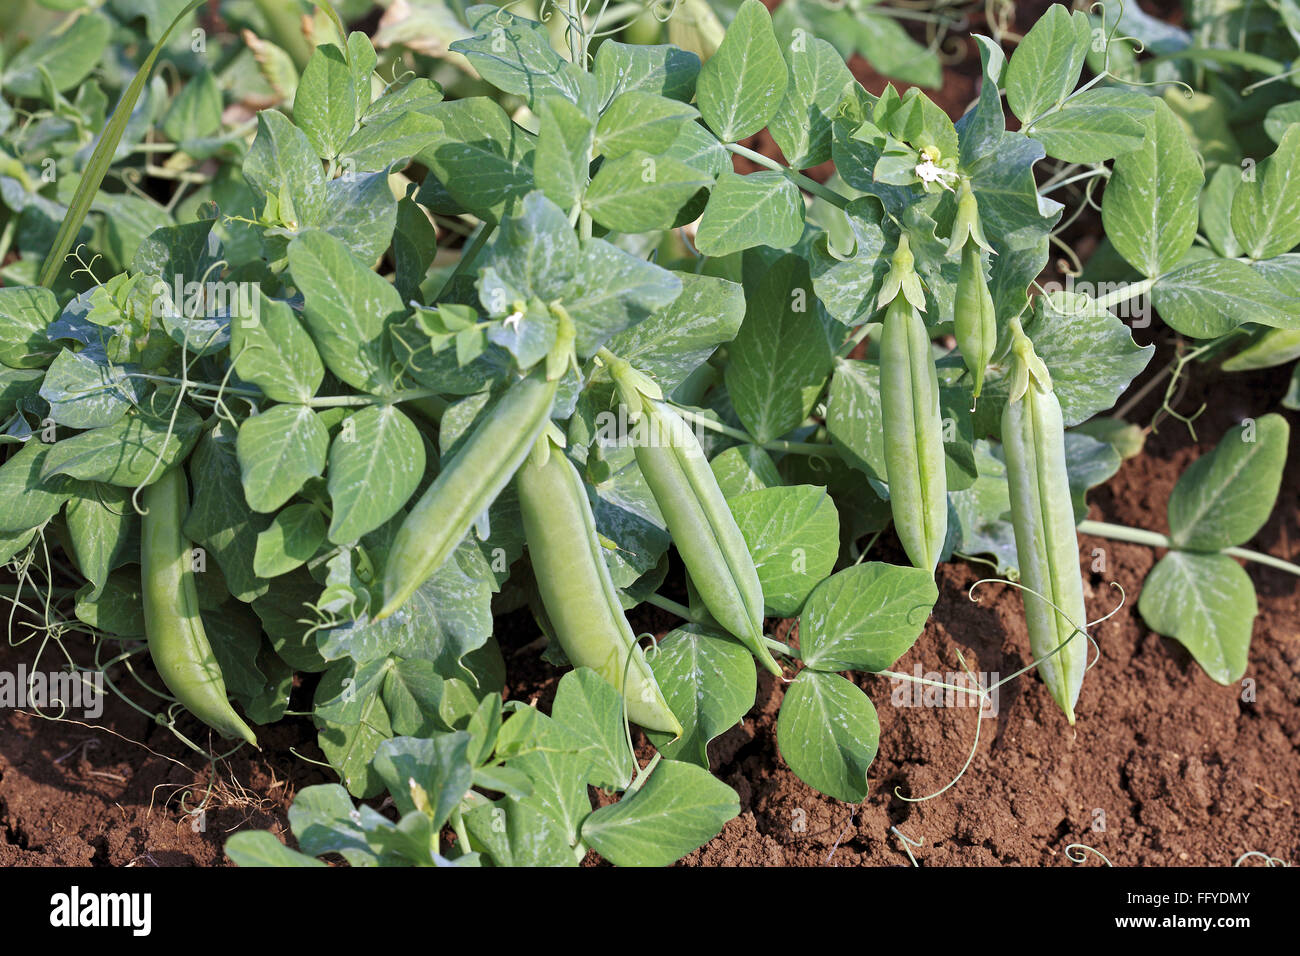 verde piselli pianta pisum sativum giardino piselli bacelli appesi su piante in campo Foto Stock